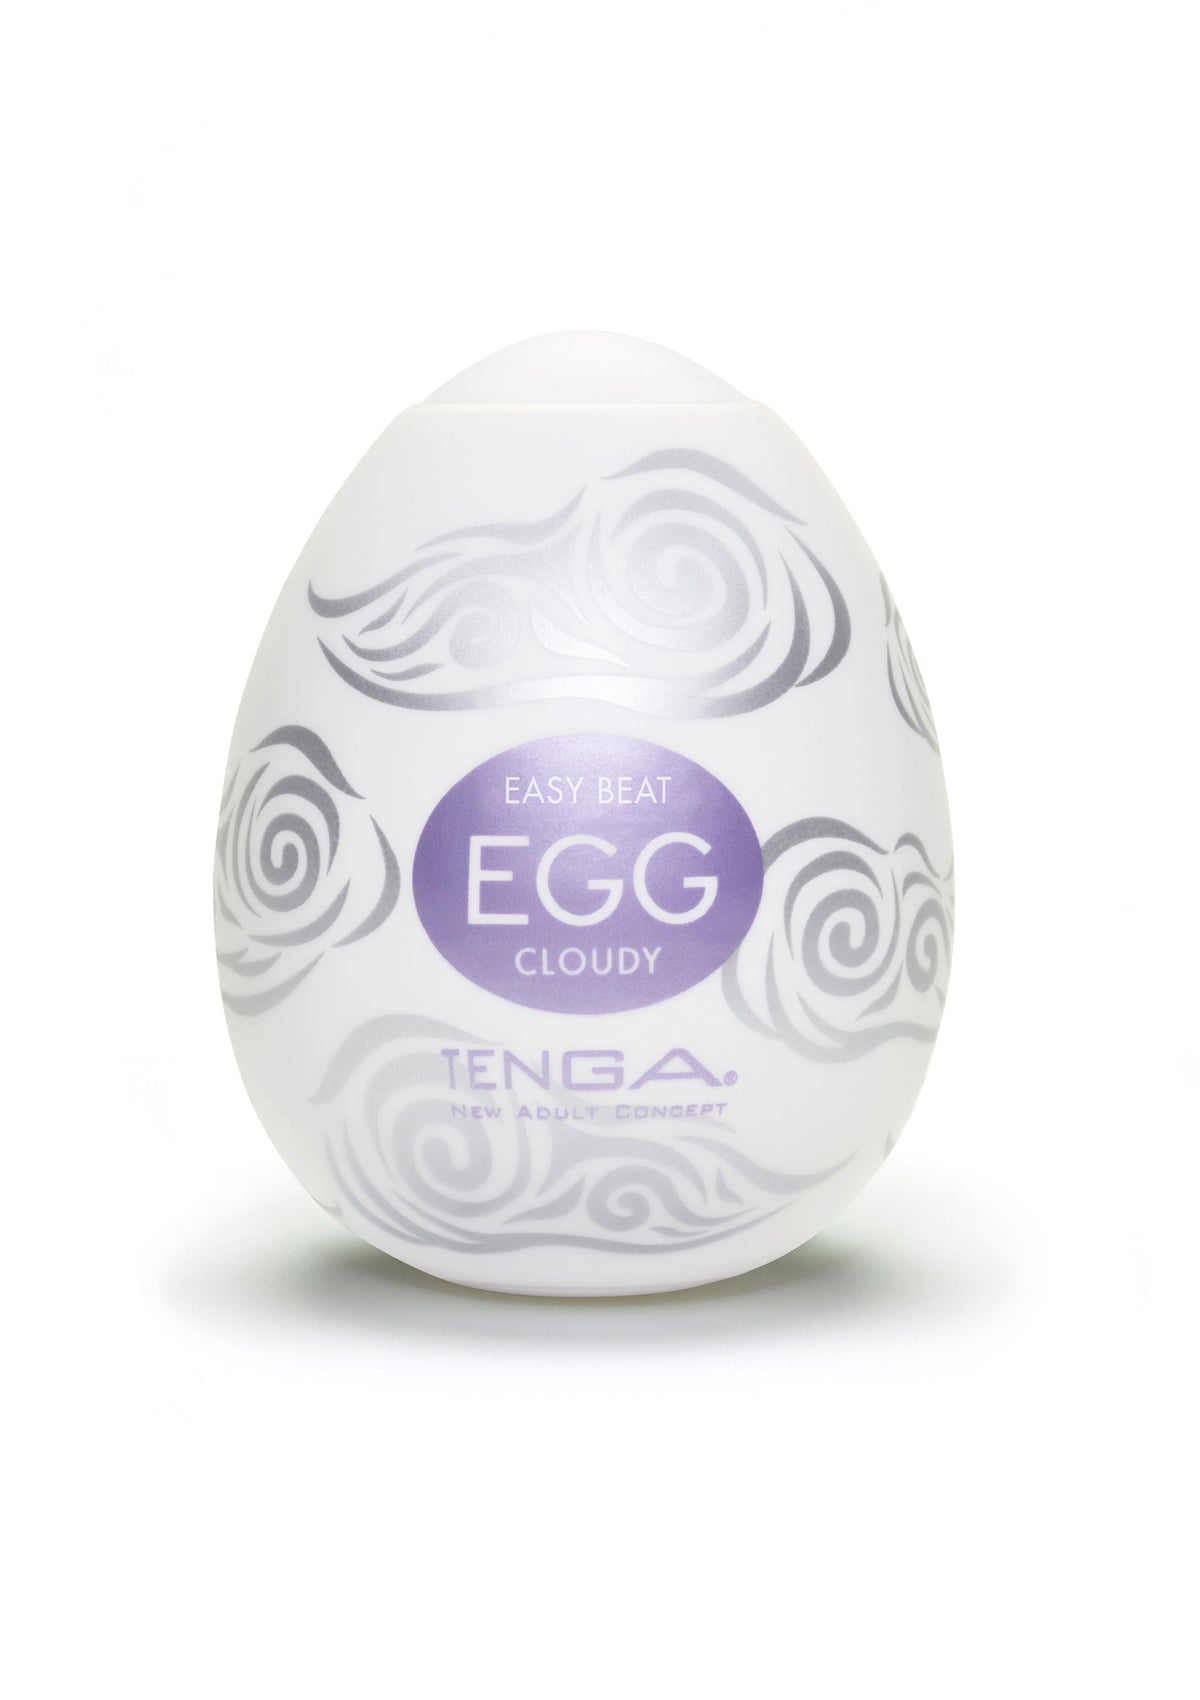 Tenga Egg Cloudy (6PCS)